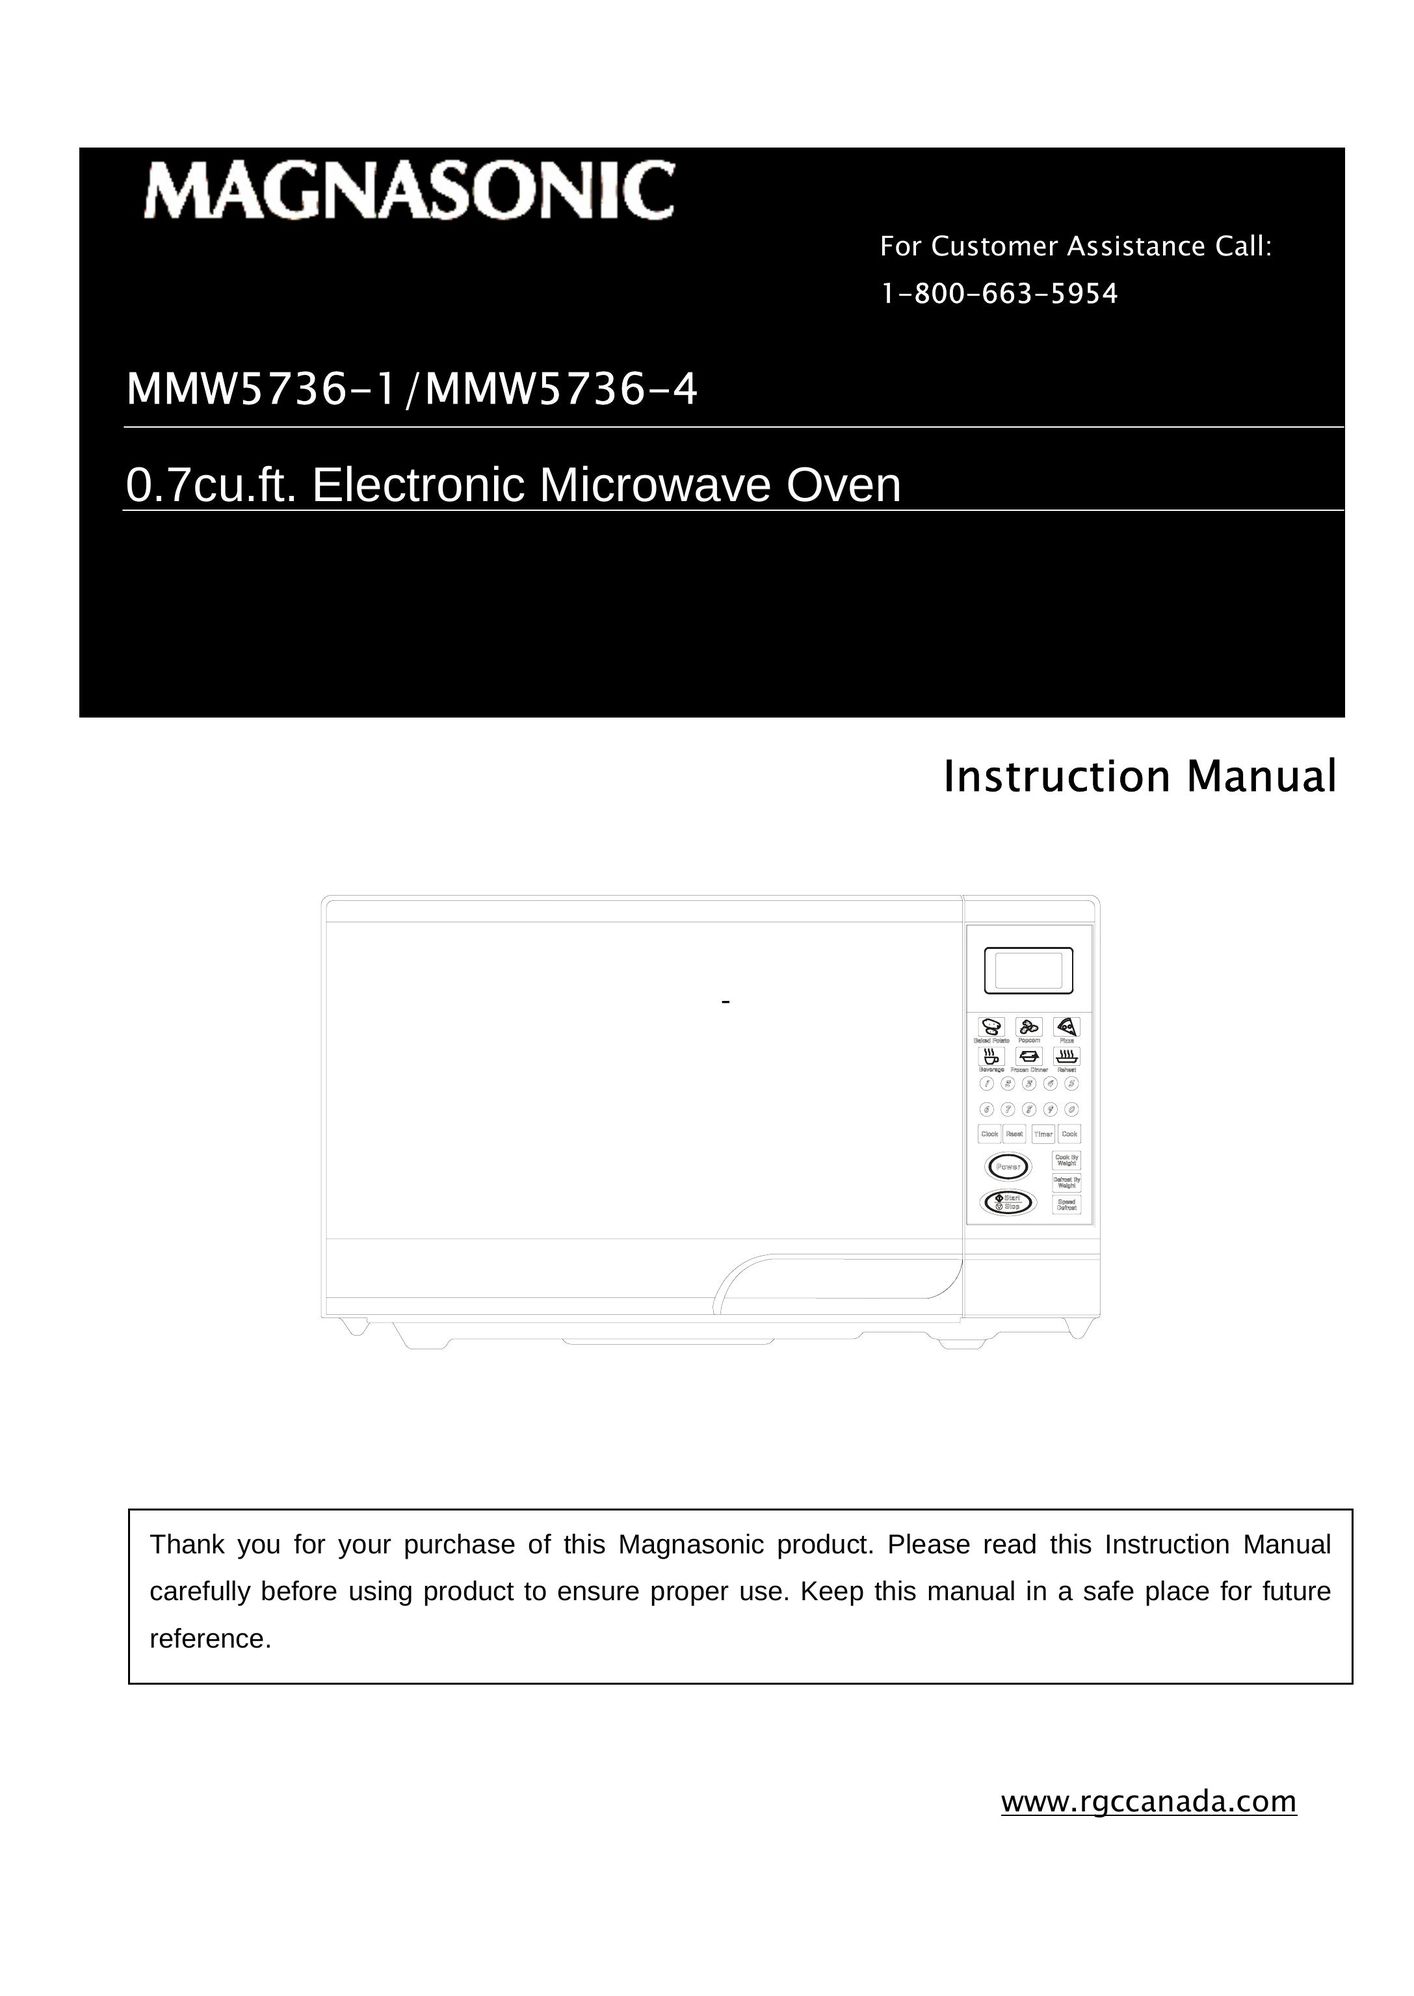 Magnasonic MMW5736-1 Microwave Oven User Manual